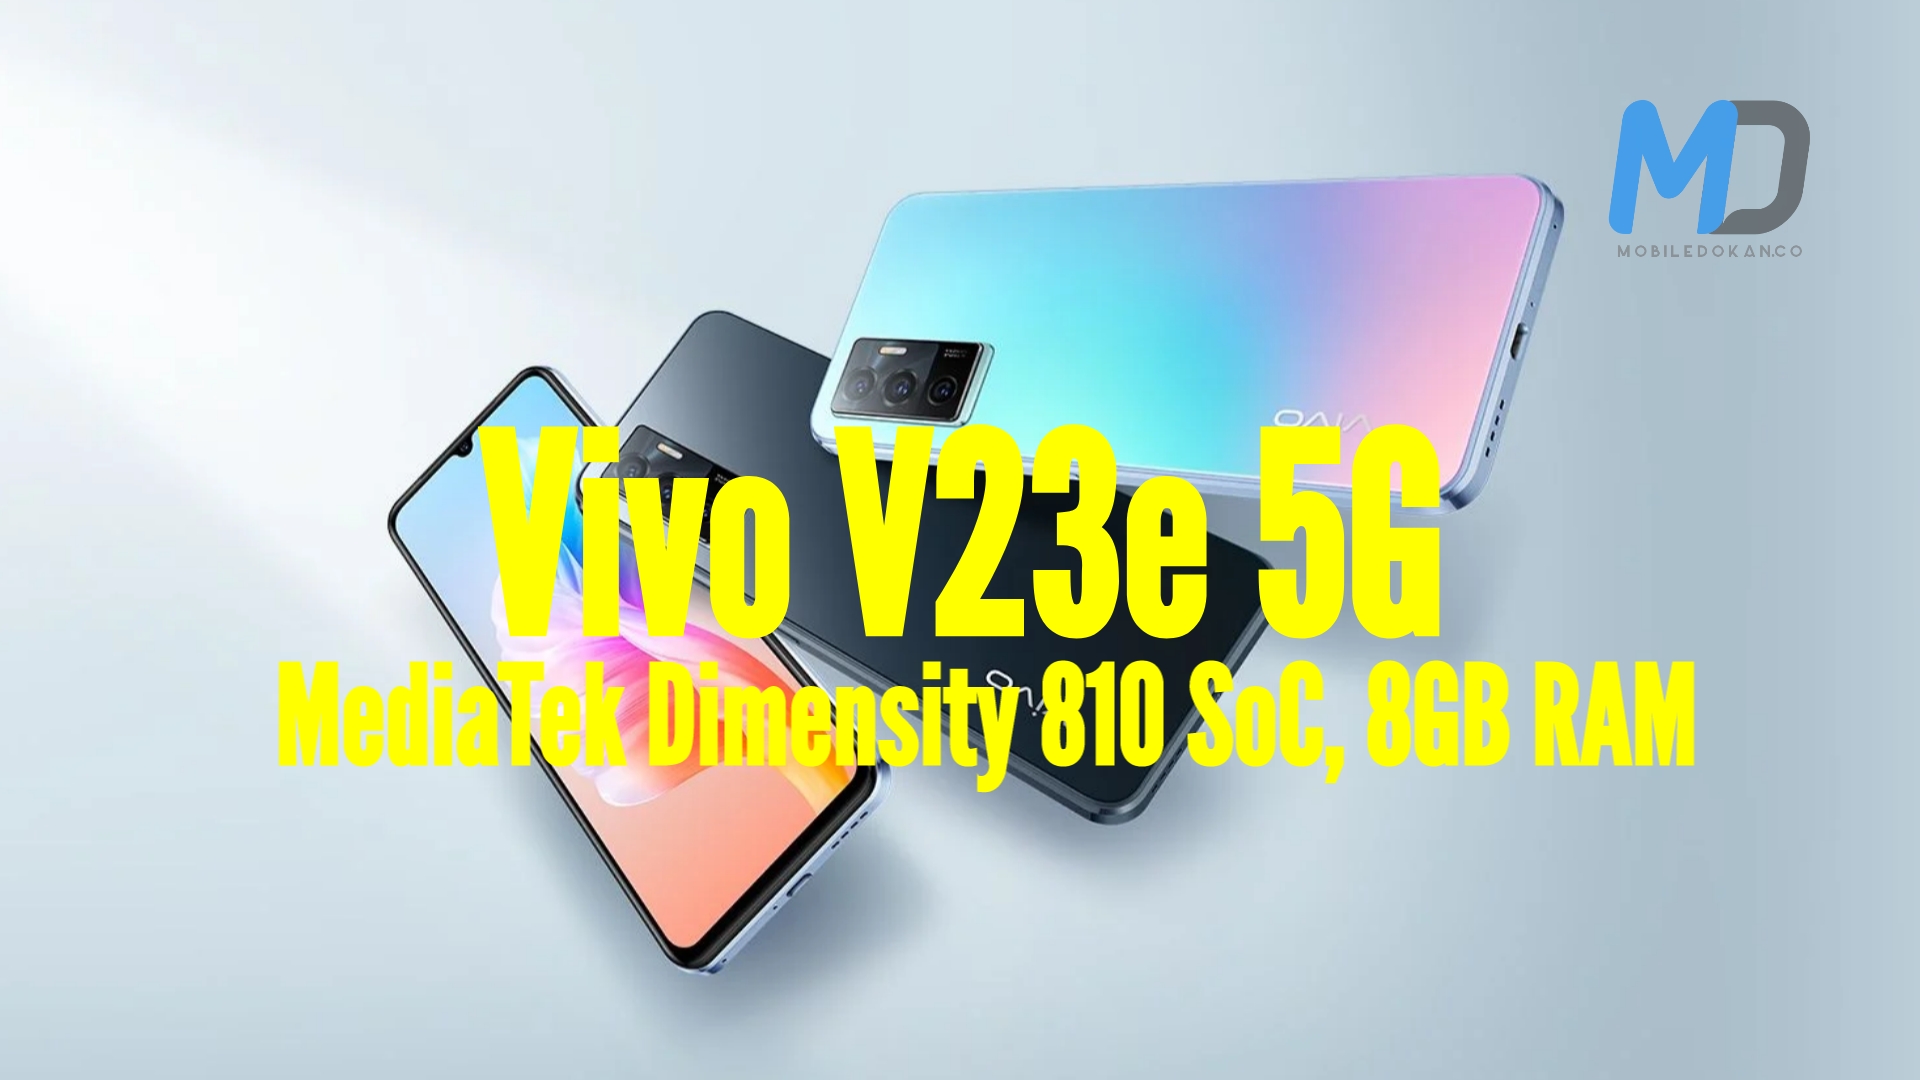 Vivo V23e 5G launched with MediaTek Dimensity 810 SoC, 8GB RAM